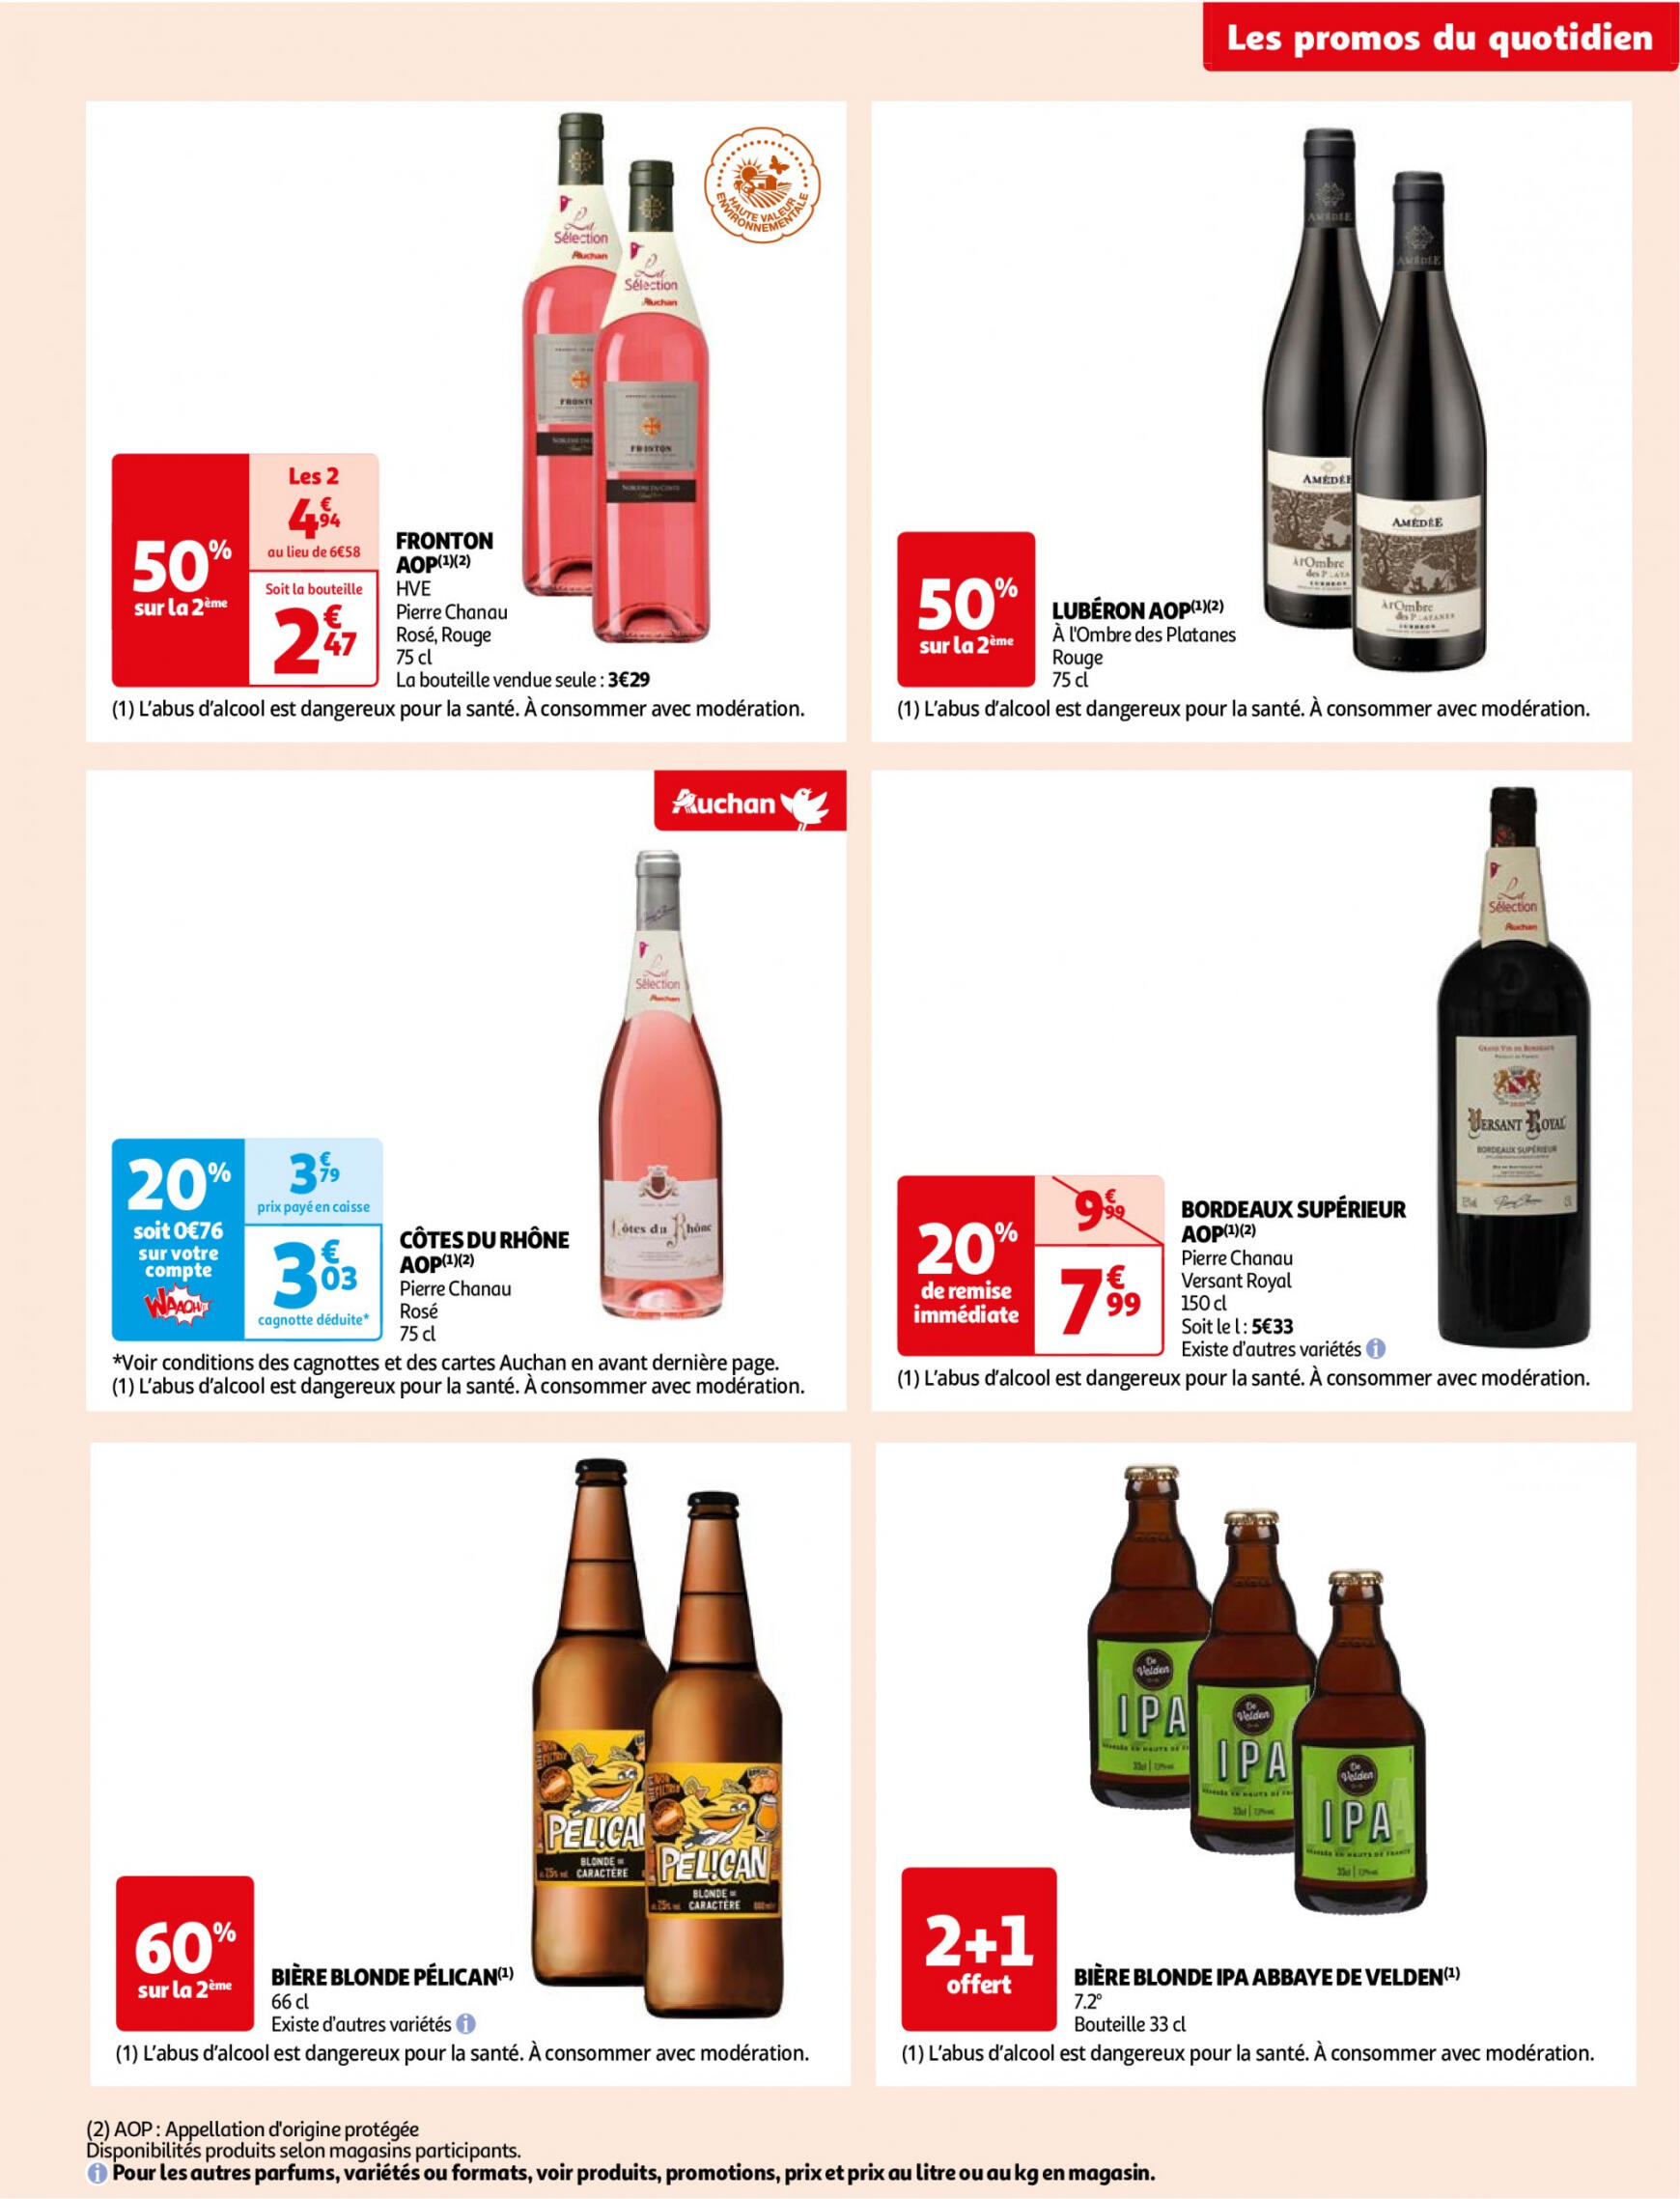 auchan - Auchan - Supermarché folder huidig 14.05. - 02.06. - page: 7